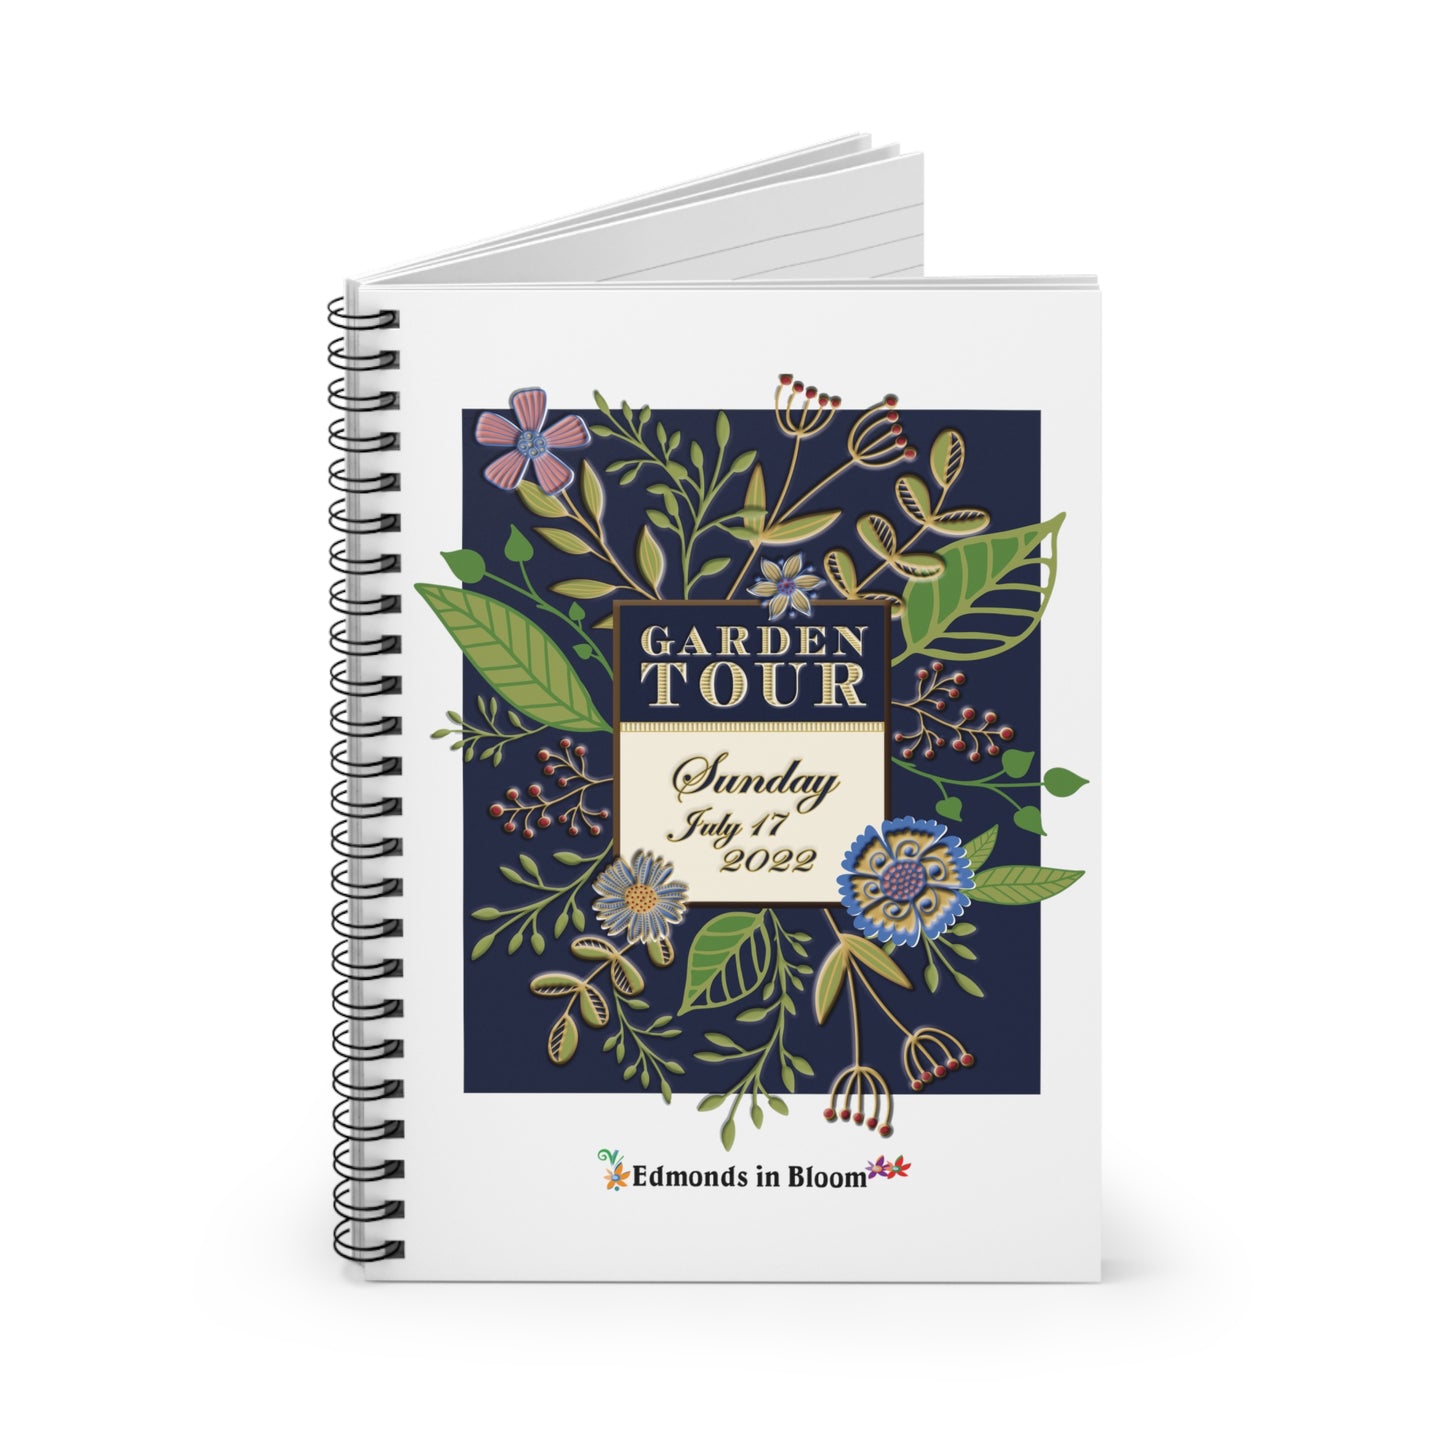 Edmonds in Bloom 2022 Garden Tour Spiral Notebook - Ruled Line